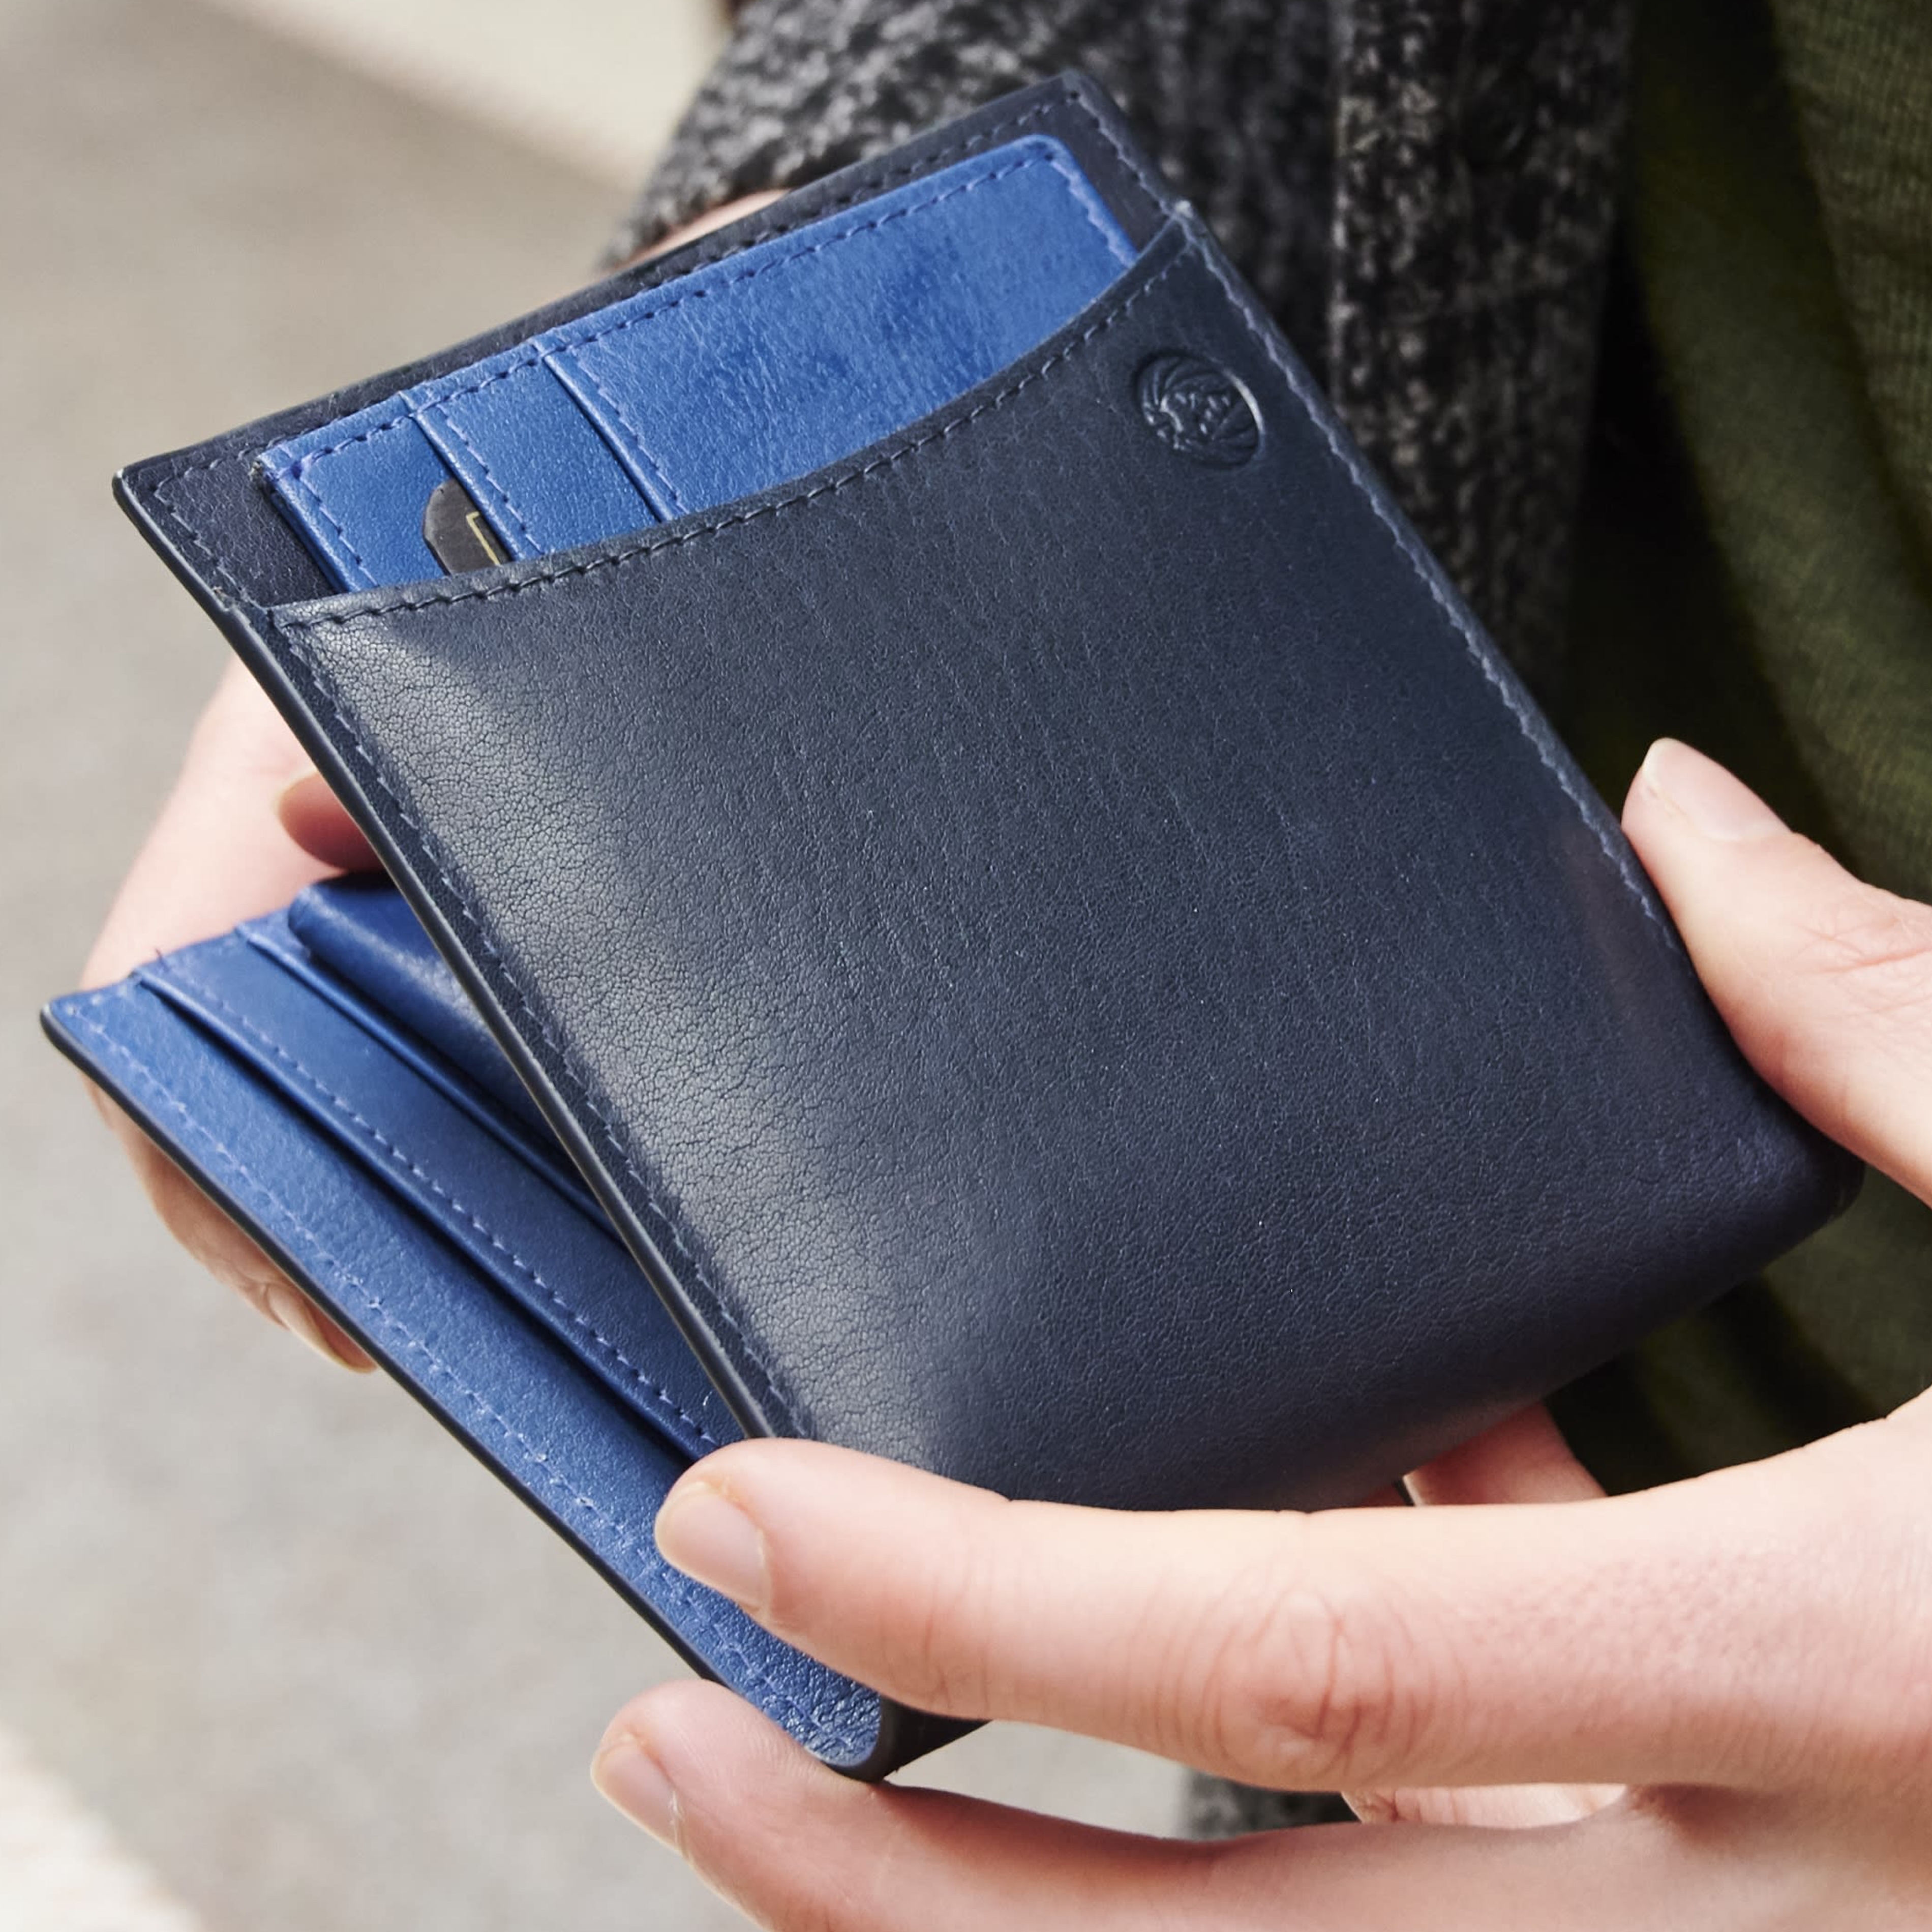 Lincoln Navy & Cobalt-Blue Leather RFID-Blocking Wallet & Card Holder